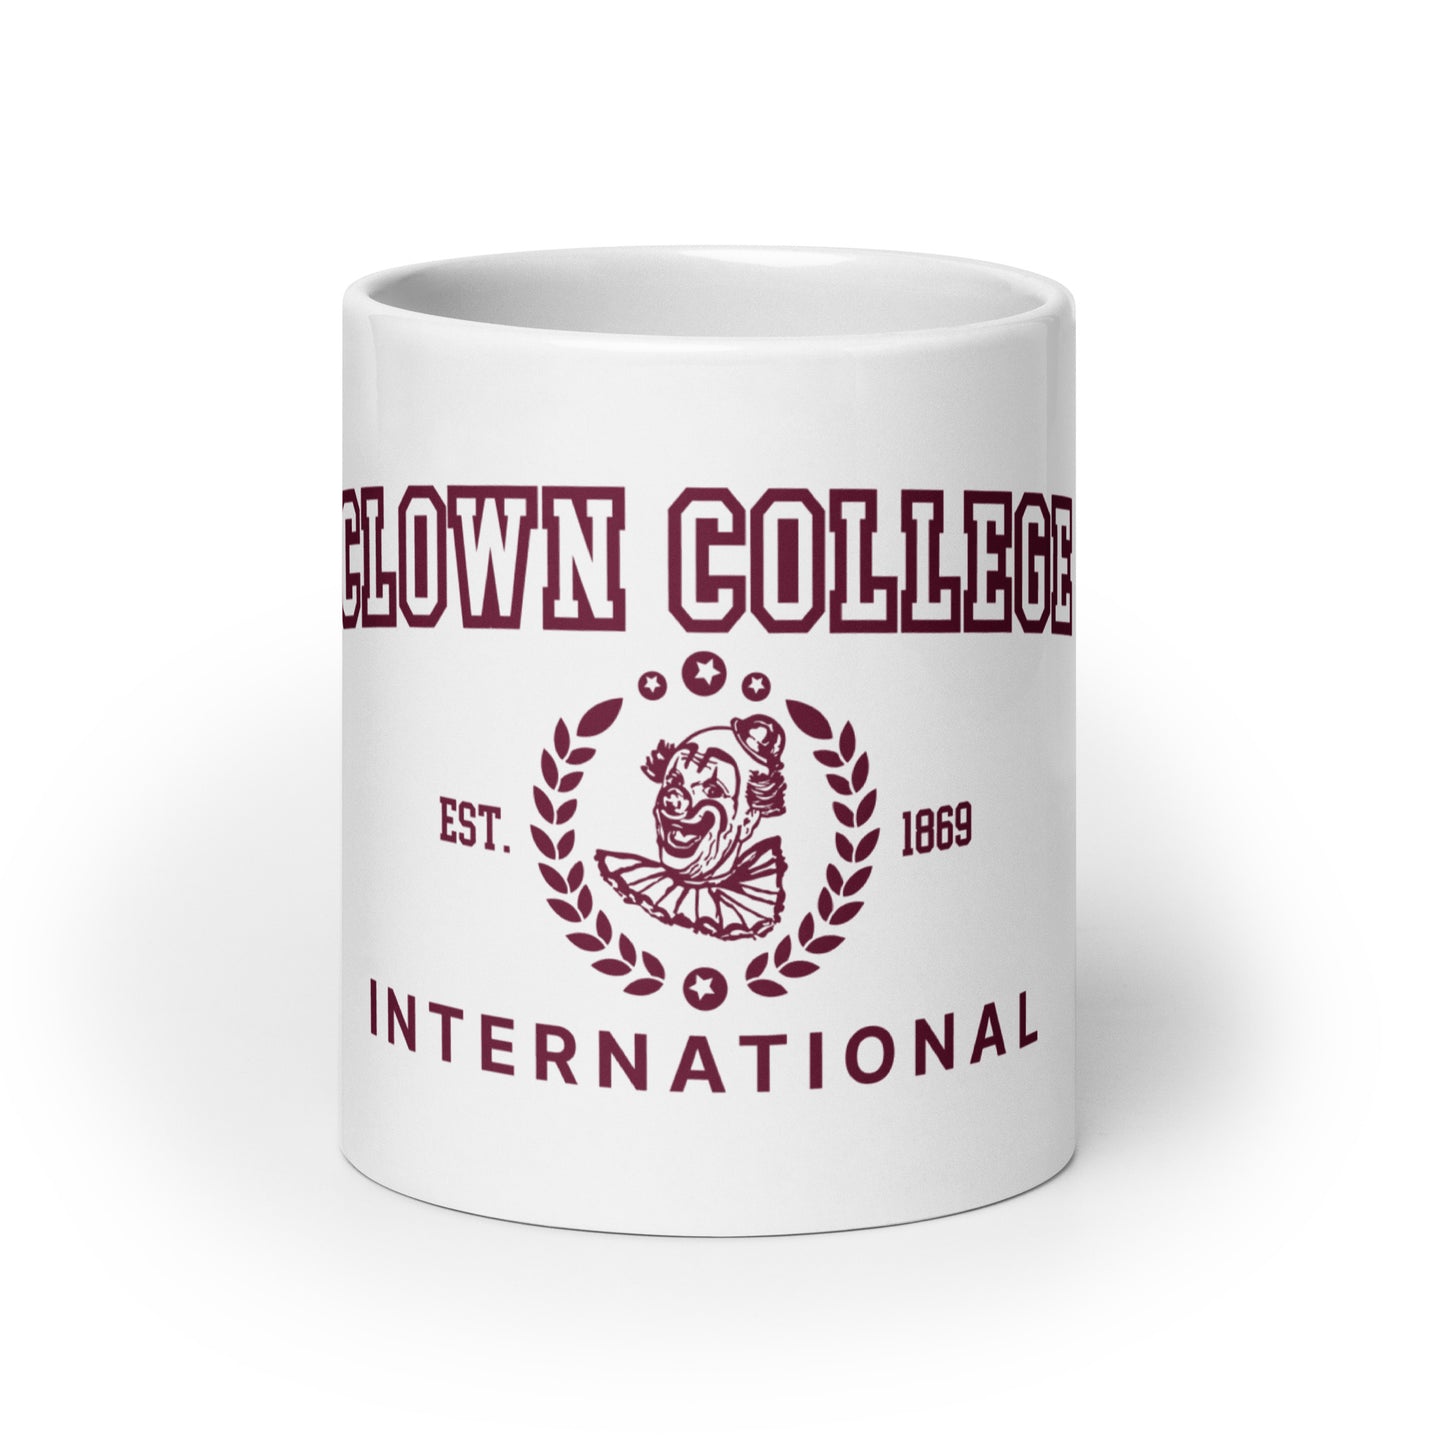 Clown College International mug